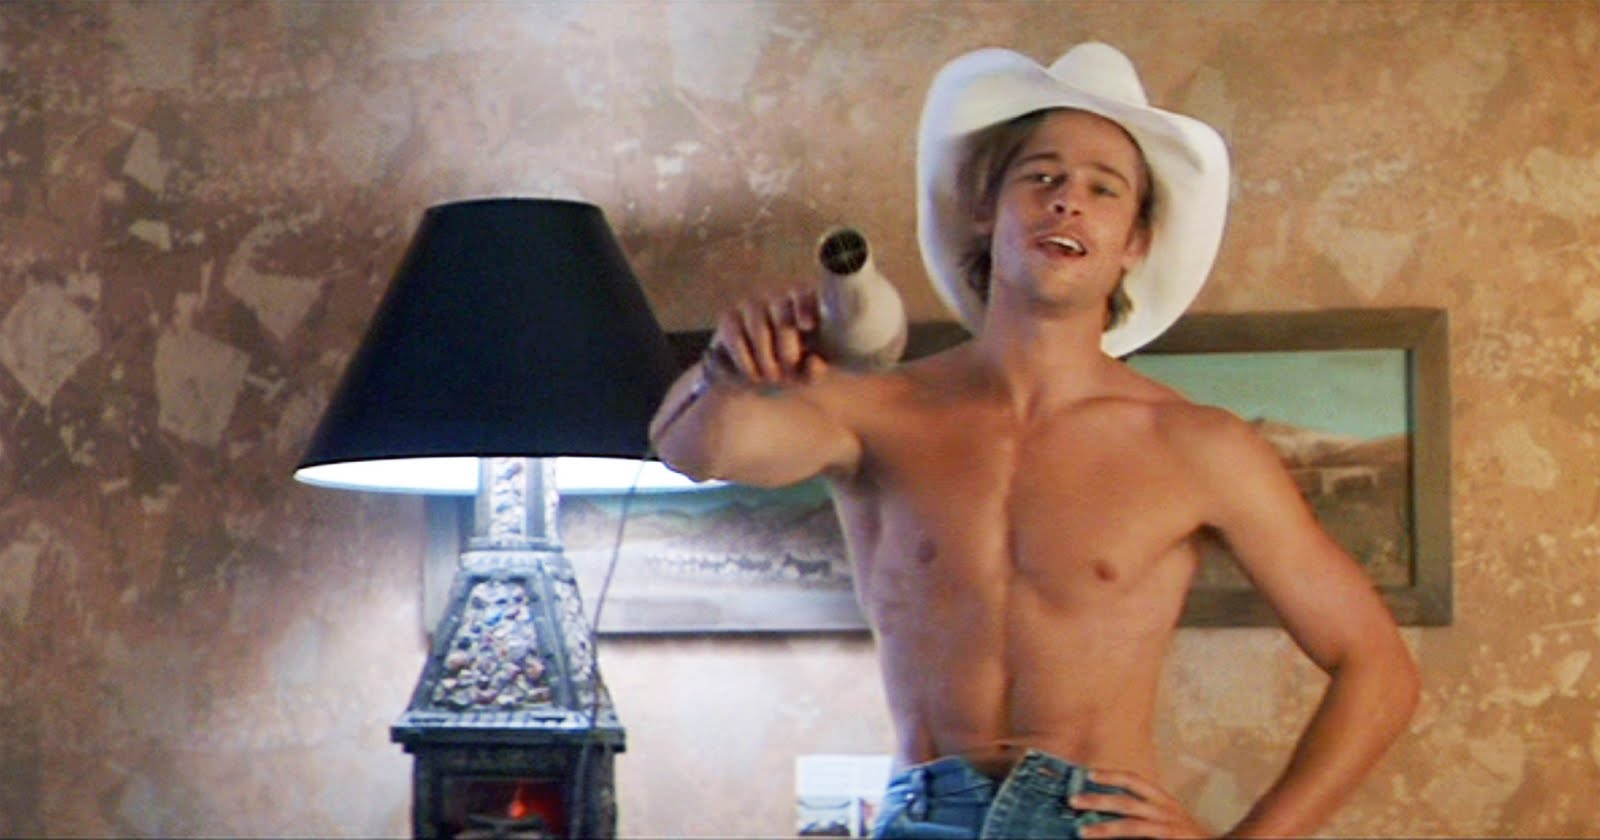 Brad-Pitt-Shirtless-Cowboy-Thelma-Louise-Photo.jpg